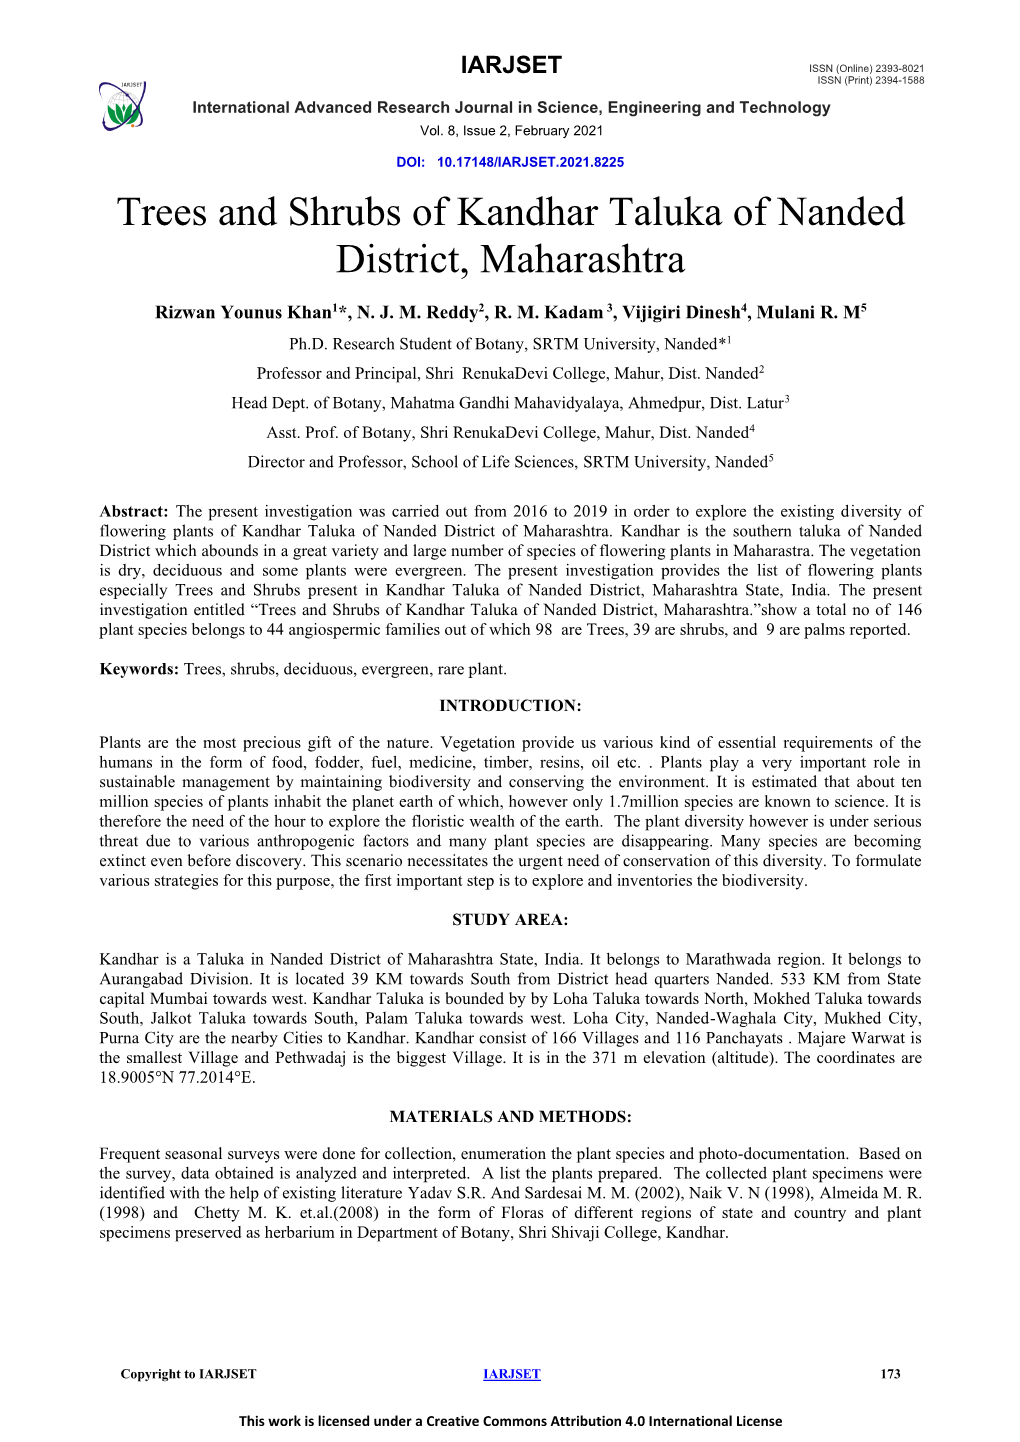 Trees and Shrubs of Kandhar Taluka of Nanded District, Maharashtra